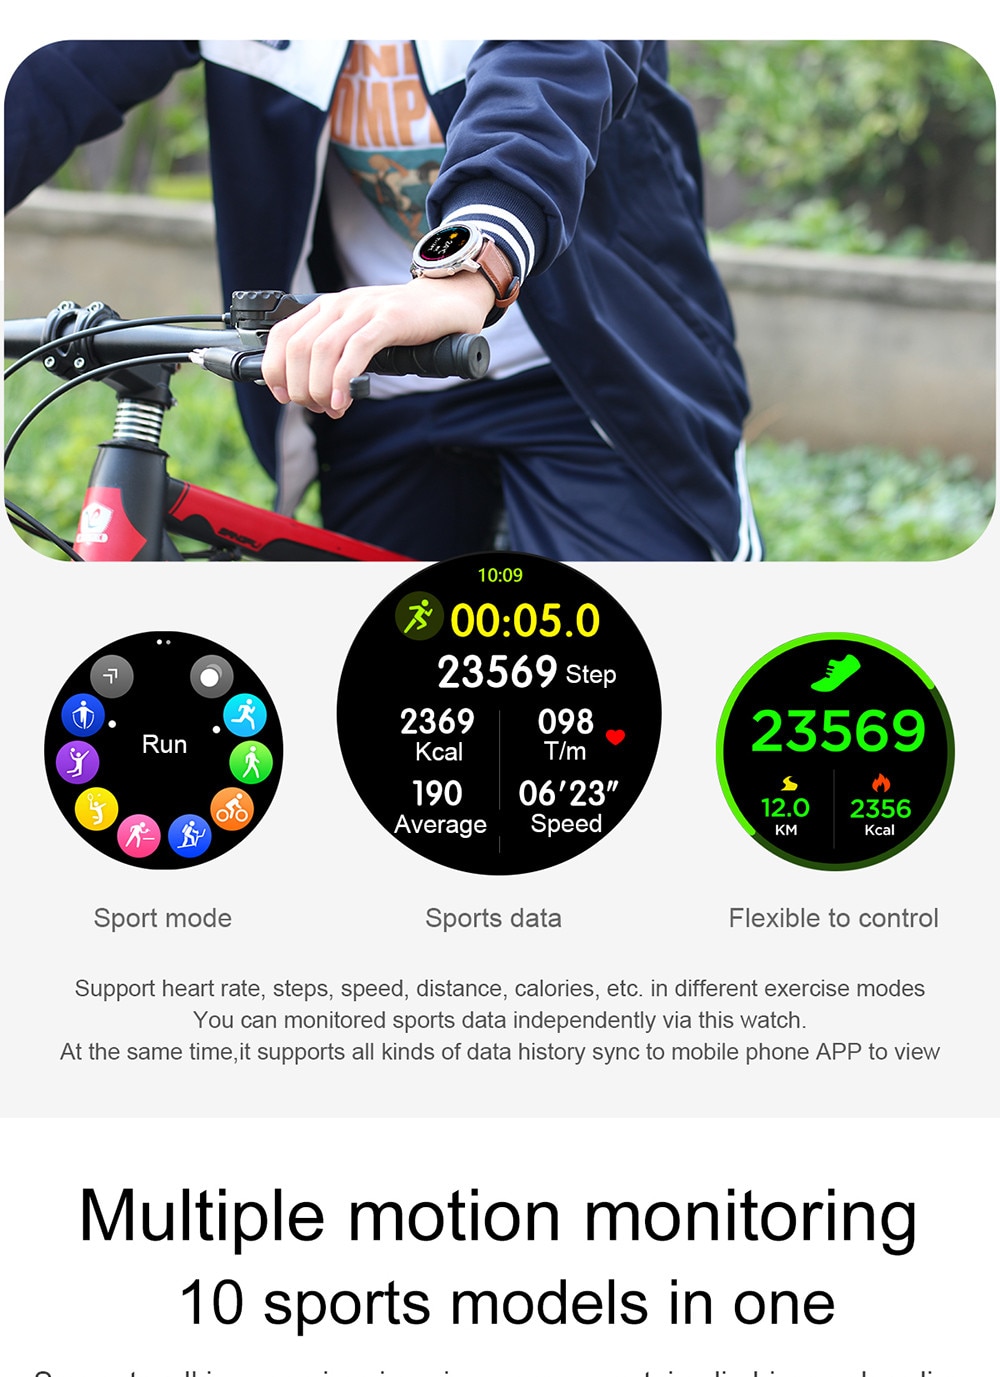 2020 L11 Smart Watch Men ECG+PPG Heart Rate Blood Pressure Monitor IP68 Waterproof Weather Smartwatch watches